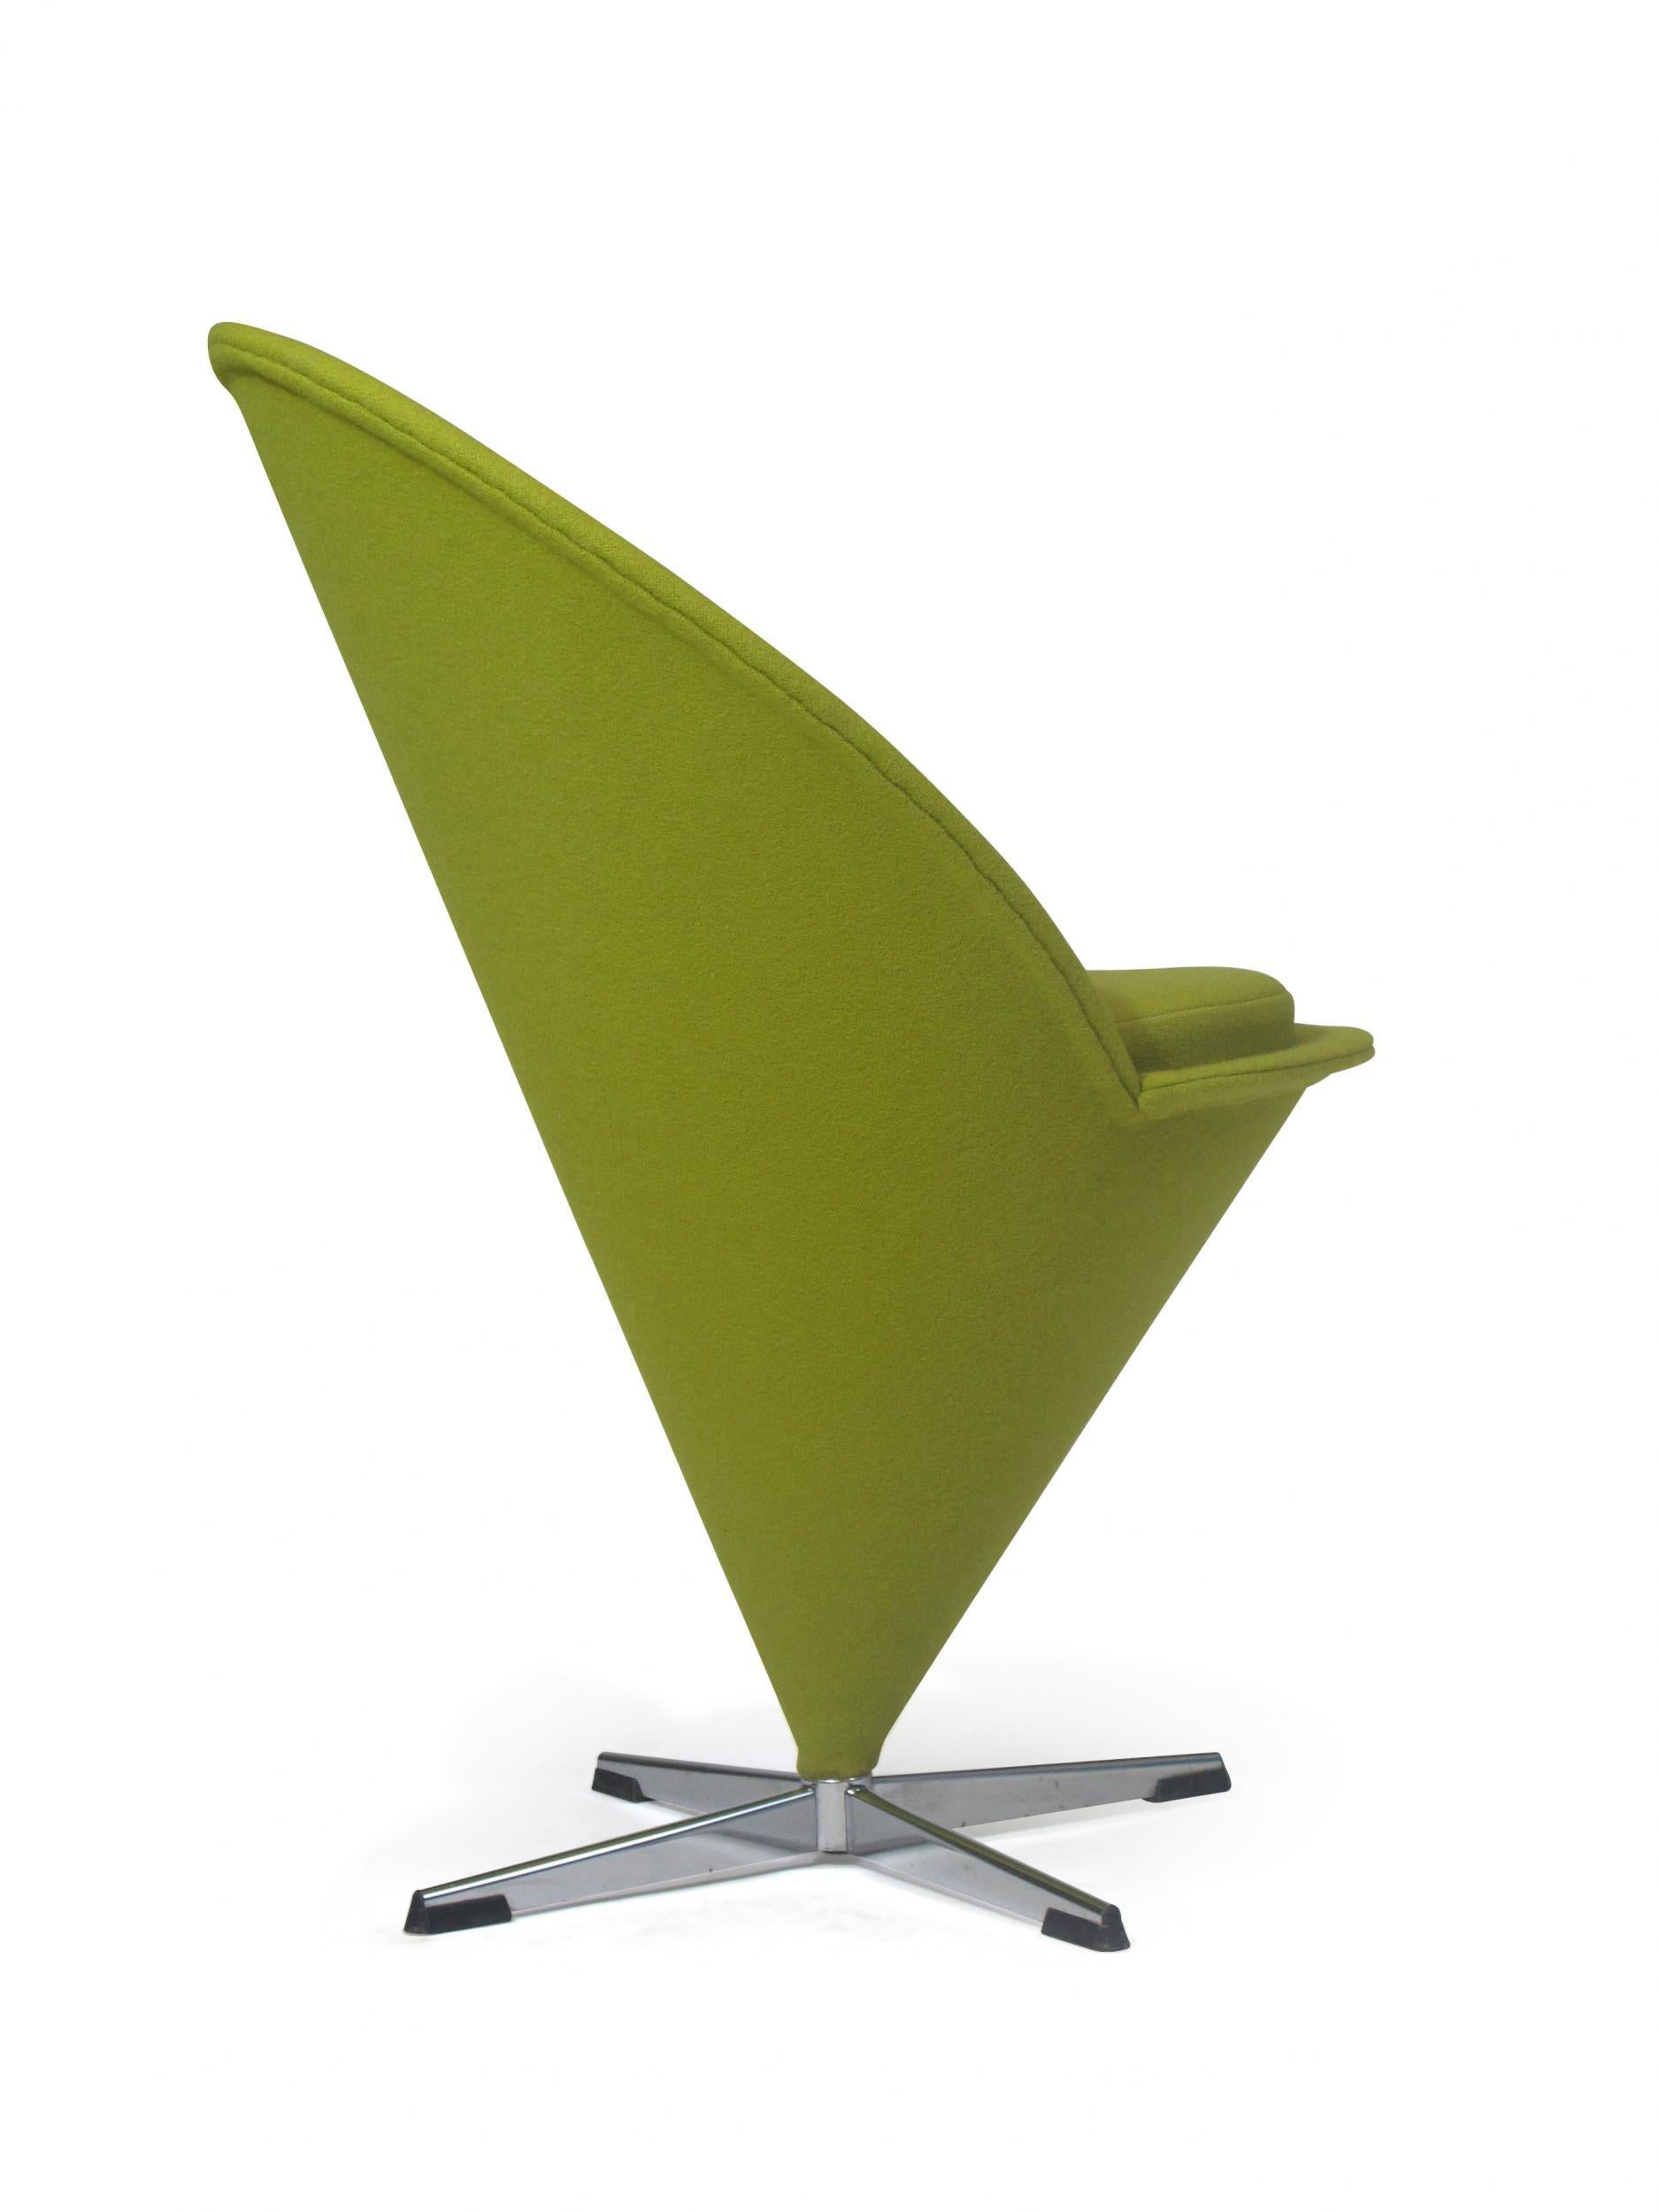 Danish Verner Panton Cone Chair For Sale